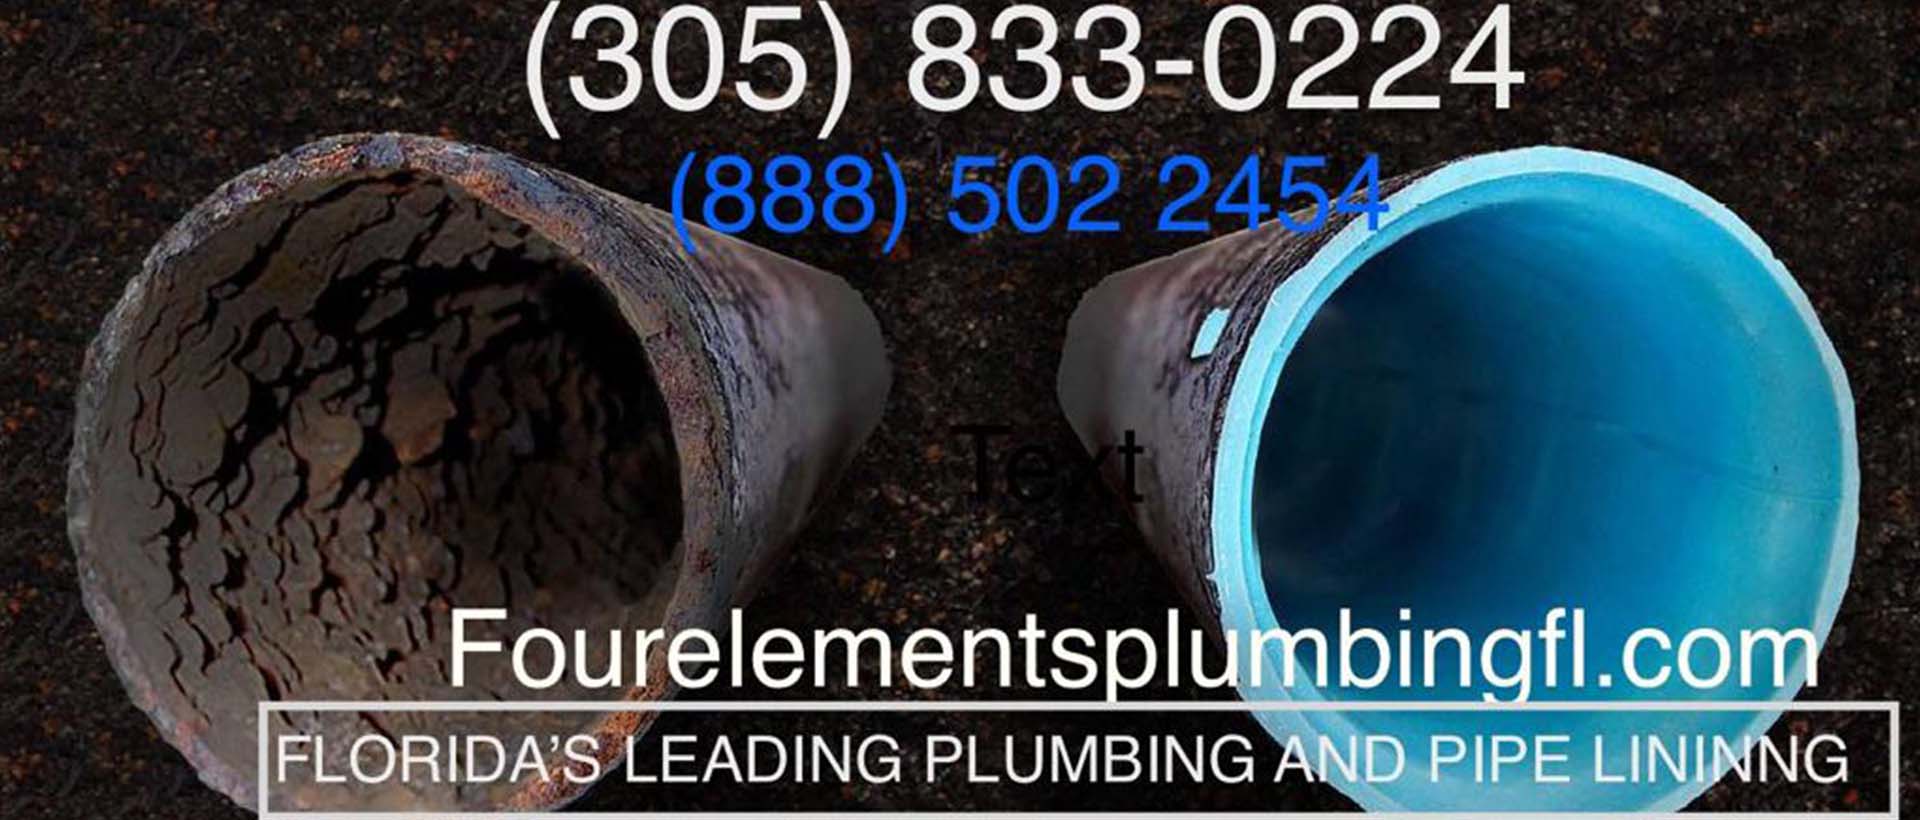 Plumber, Plumbing Company and Plumbing Services